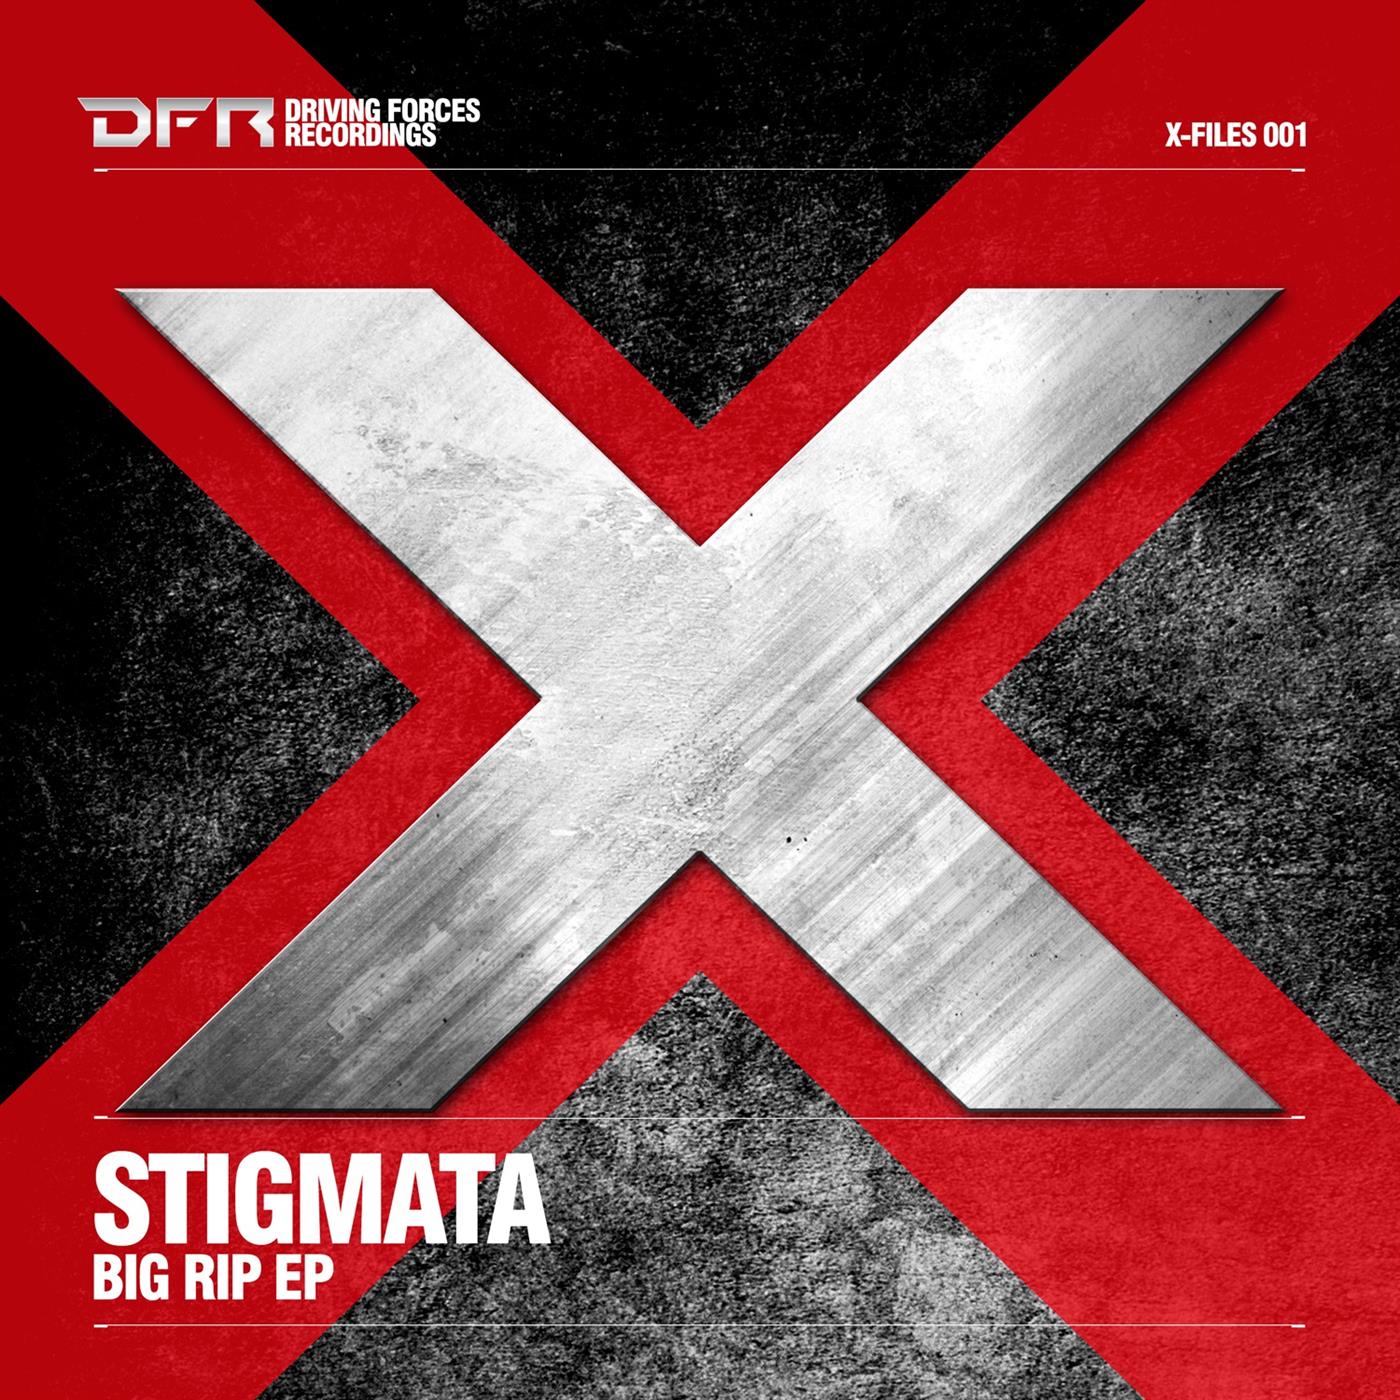 Big Rip ((Original Mix)) - Original Mix